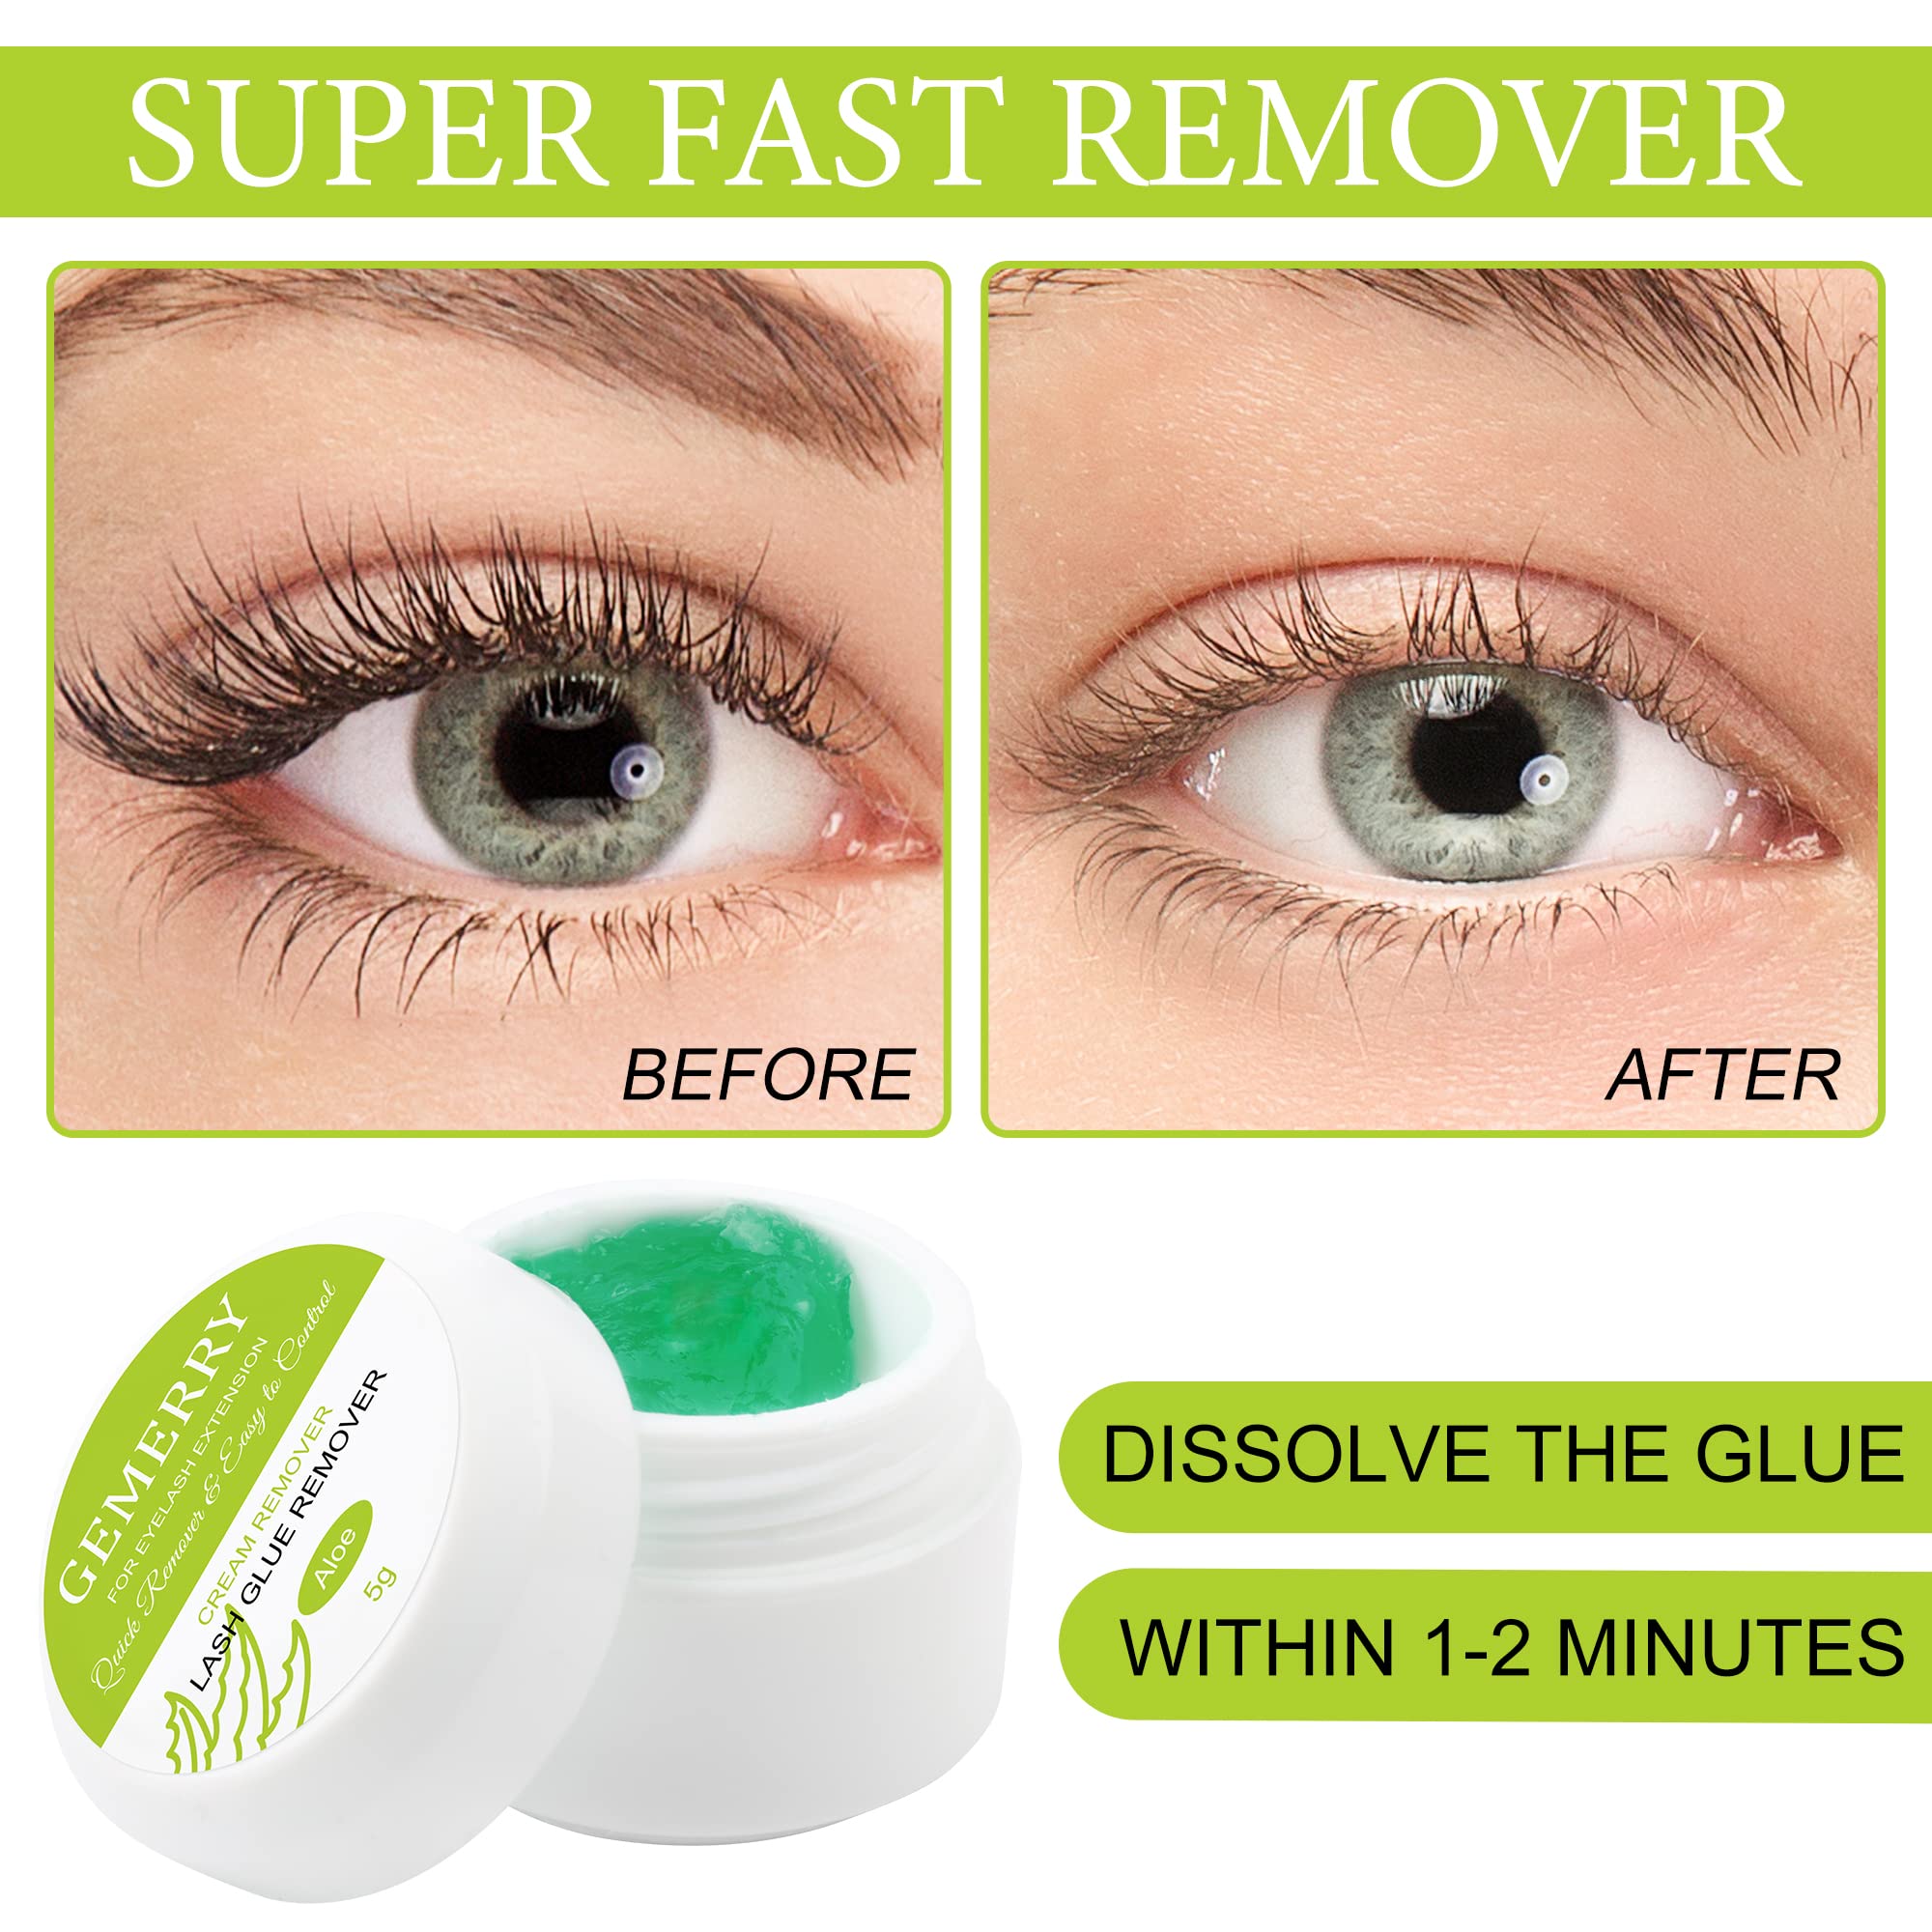 GEMERRY Lash Glue Remover 5g Cream Eyelash Glue Remover Gentle Formula Cream Remover for Sensitive Skin Fast Disslove Lash Remover for Lash Extensions(Aloe)